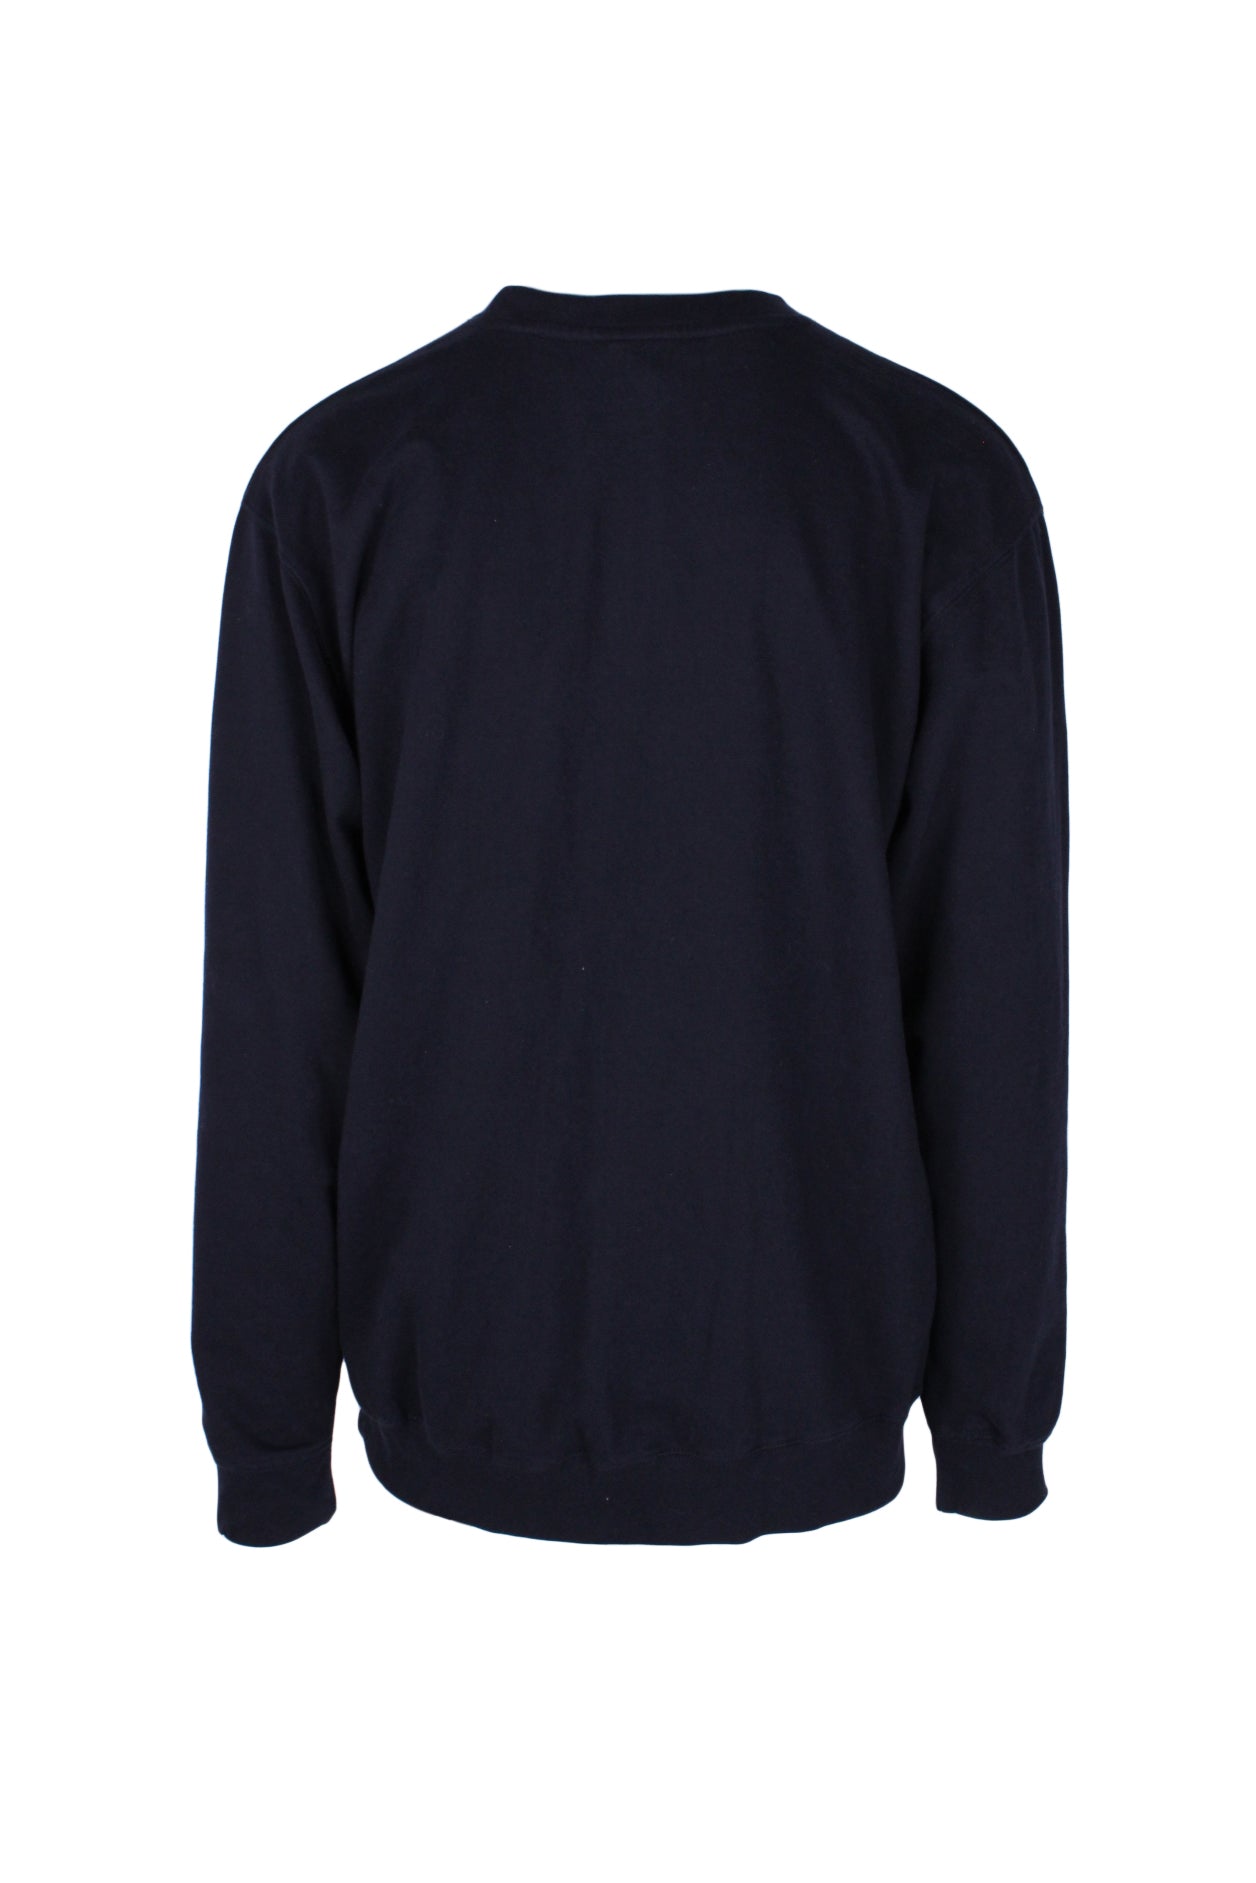 back angle of long sleeve pullover sweatshirt. 